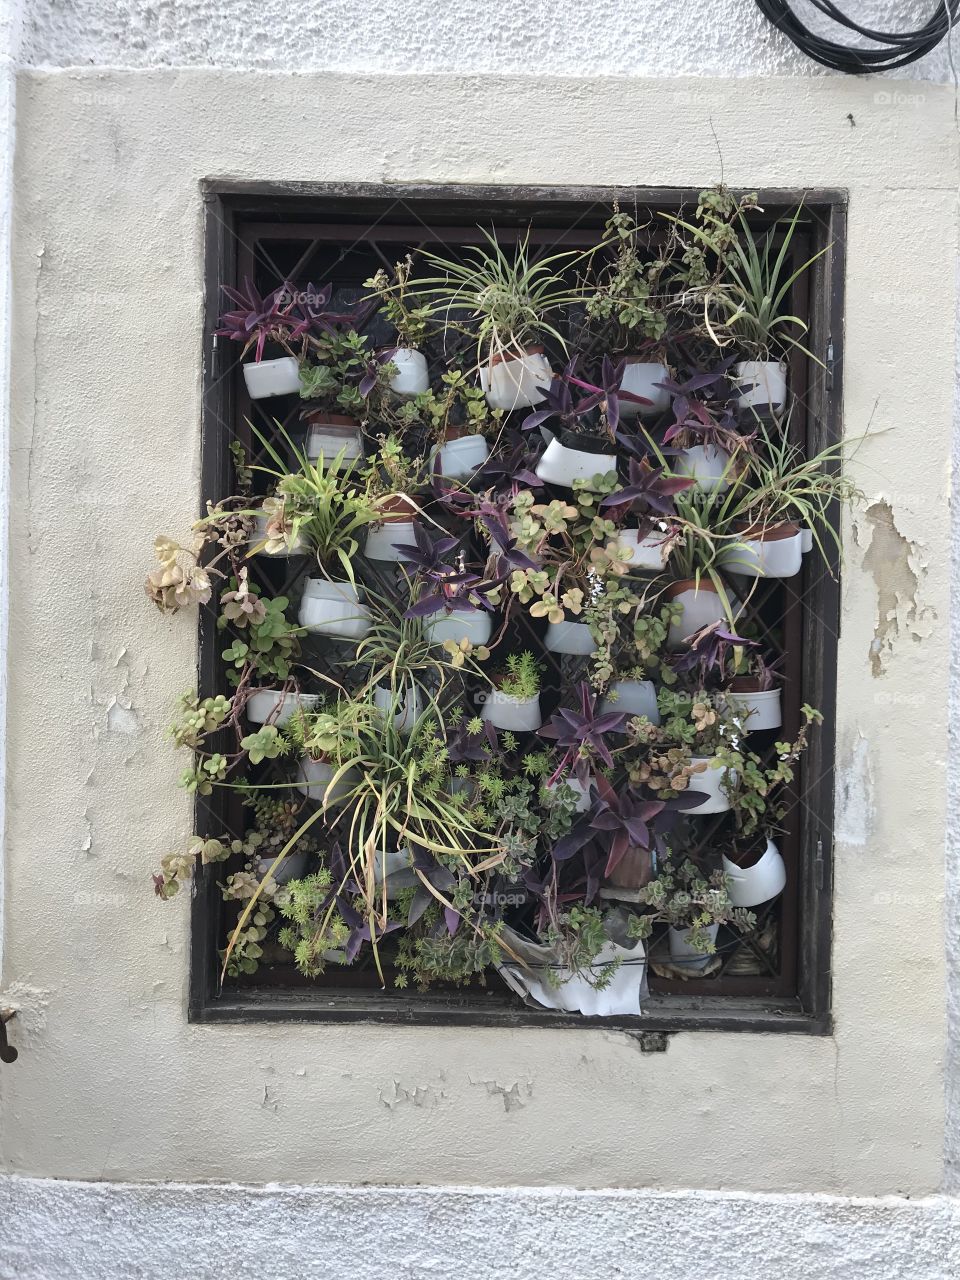 Window with flower pots